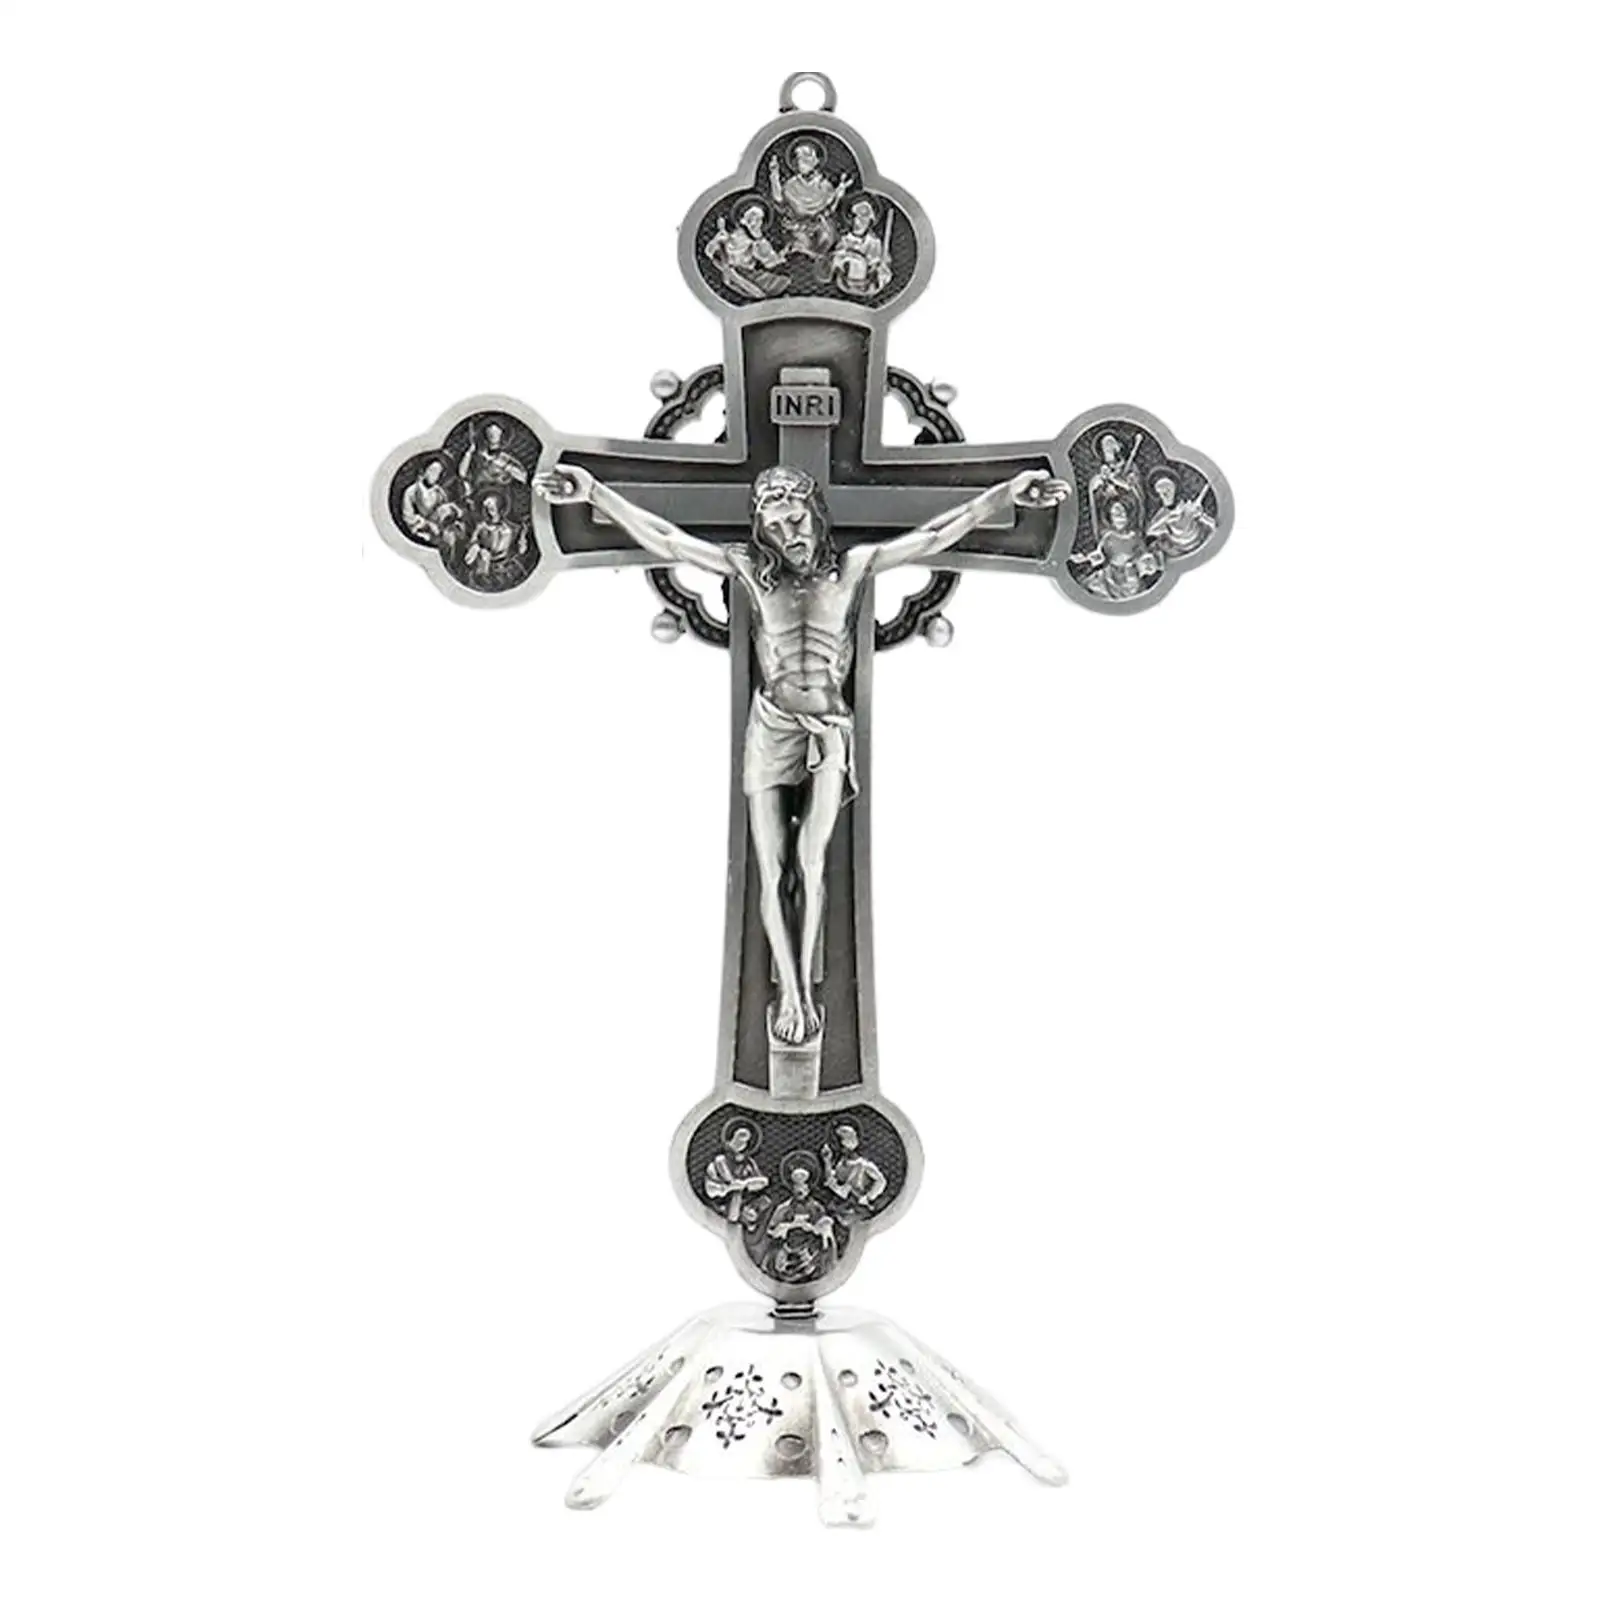 Antique Standing Crucifix Cross Home Decor Fireplace Tabletop Decor Catholic Jesus Cross